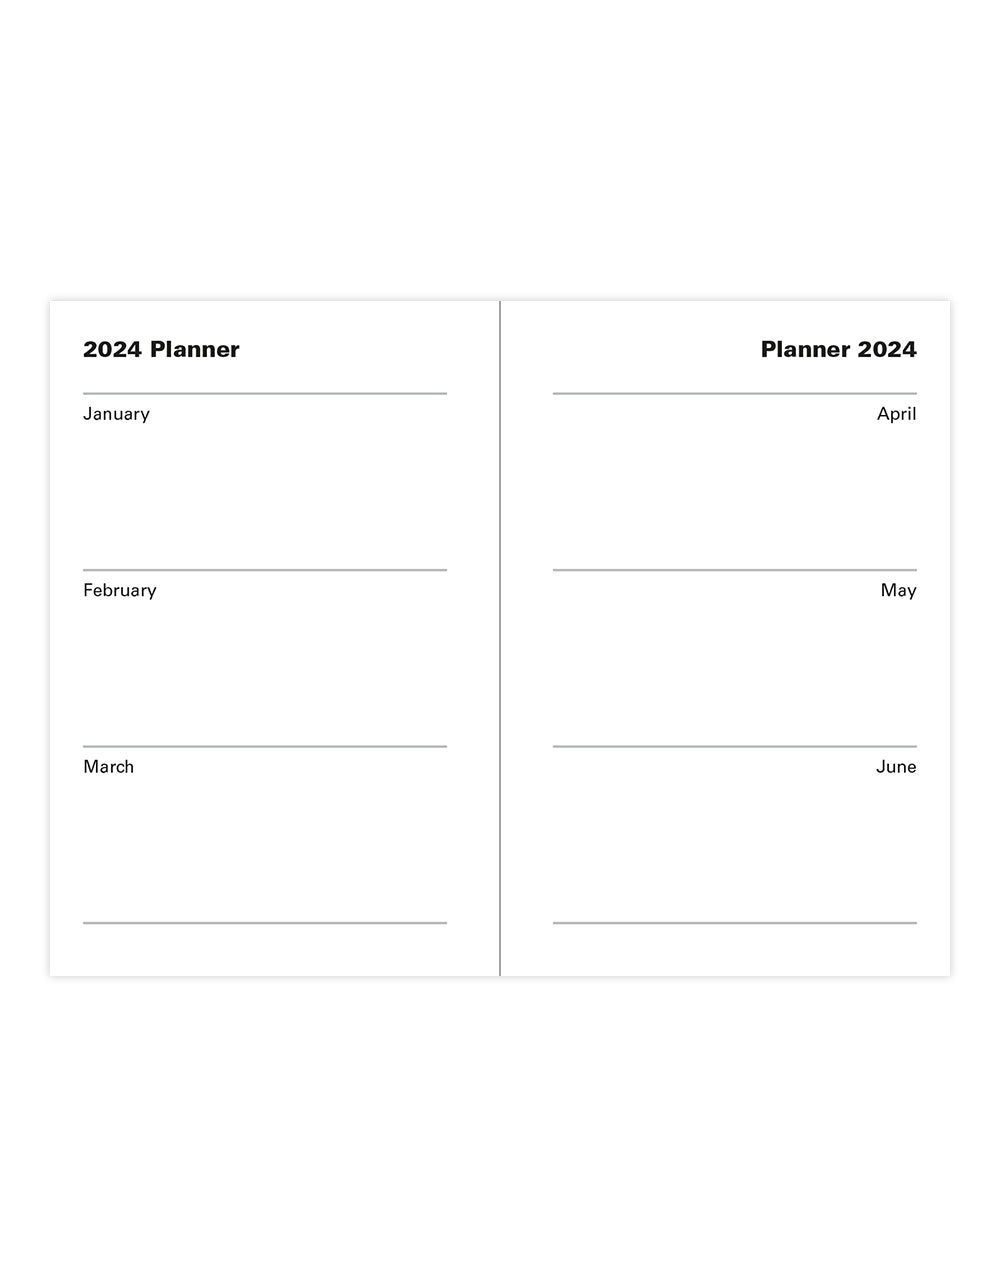 Principal Mini Pocket Day to a Page Diary 2024 - English#colour_grey